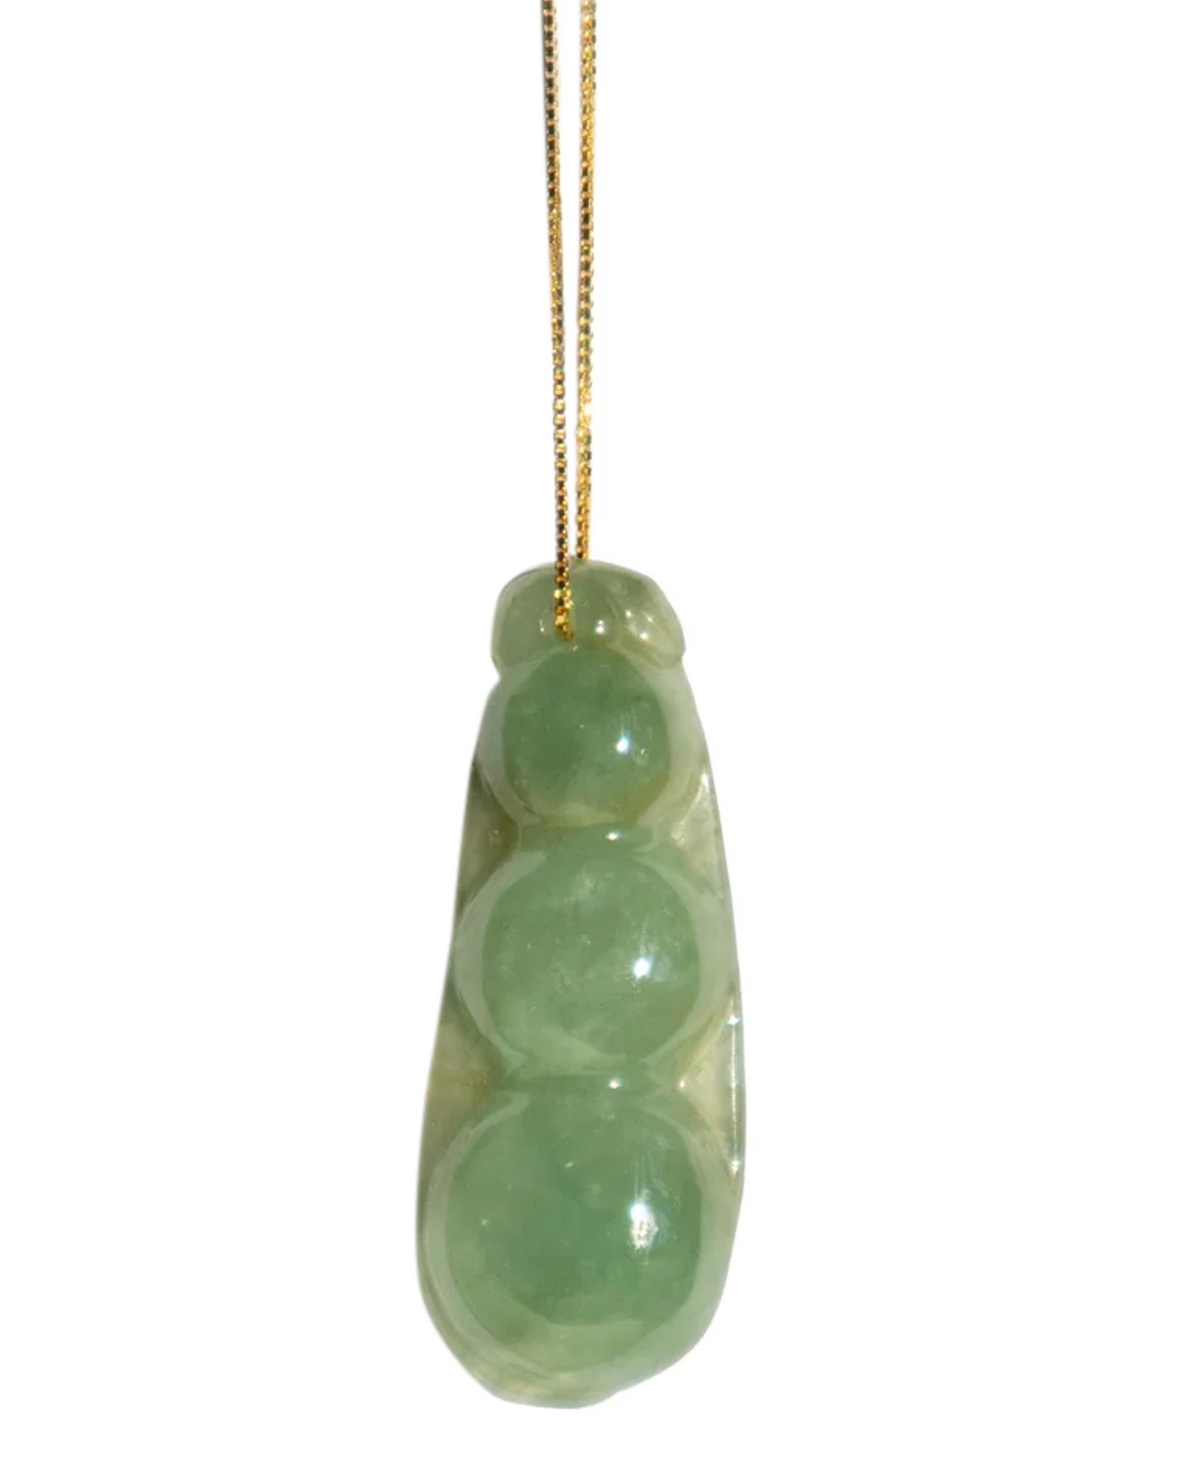 Edamame - Jade pendant necklace - Green